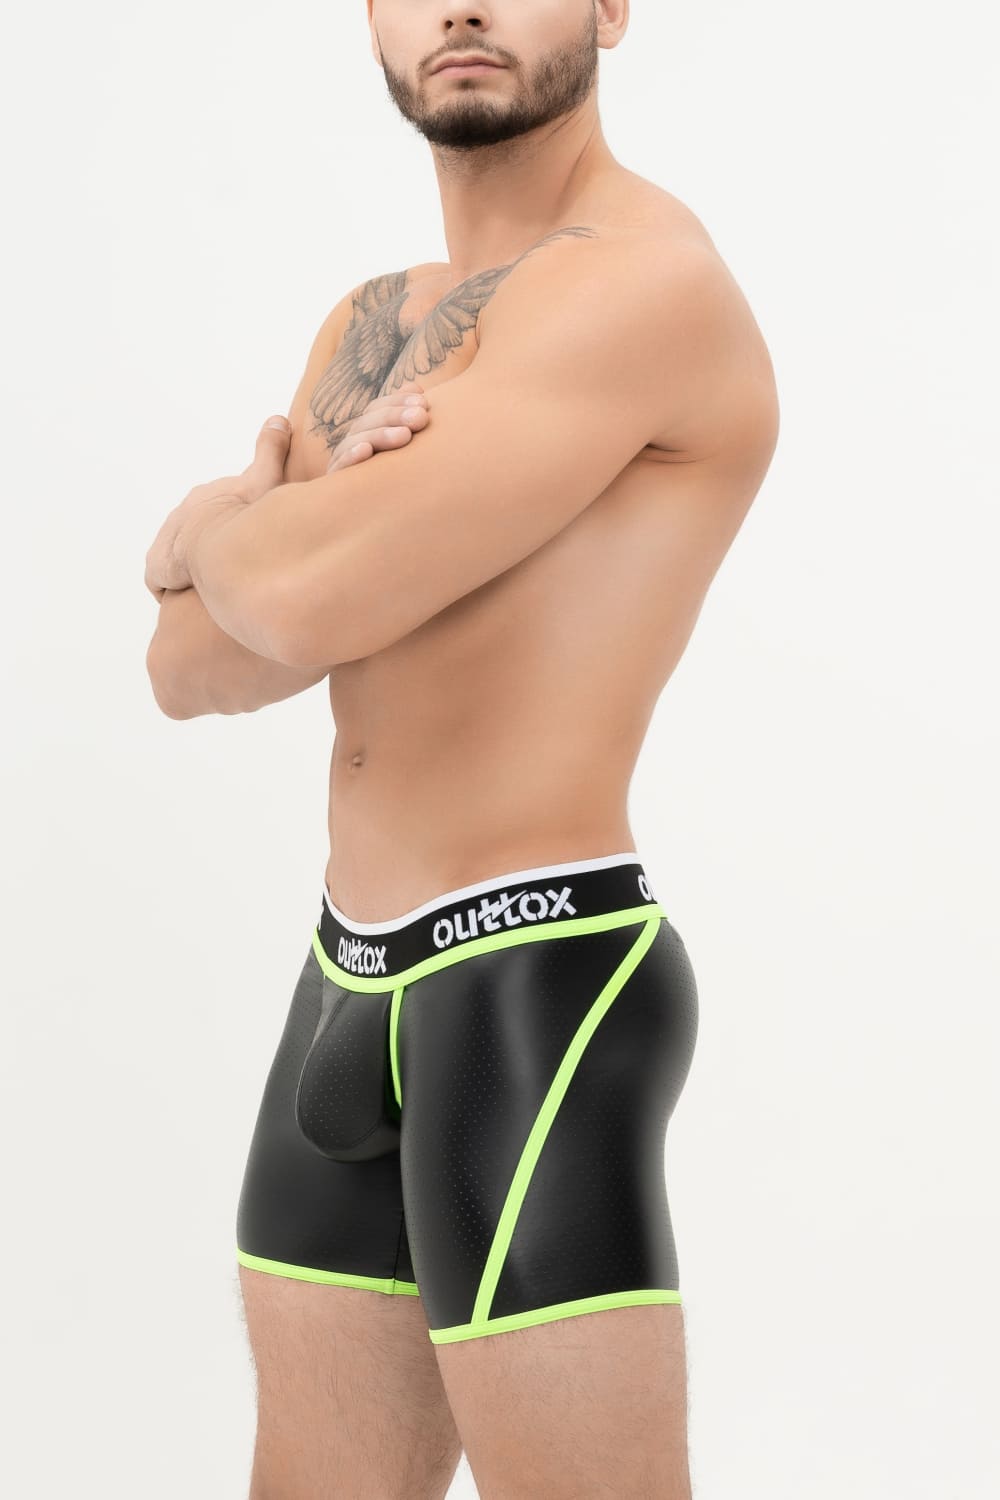 Outtox. Wrap-Rear Short Tights. Snap Codpiece. Black+Green 'Neon'